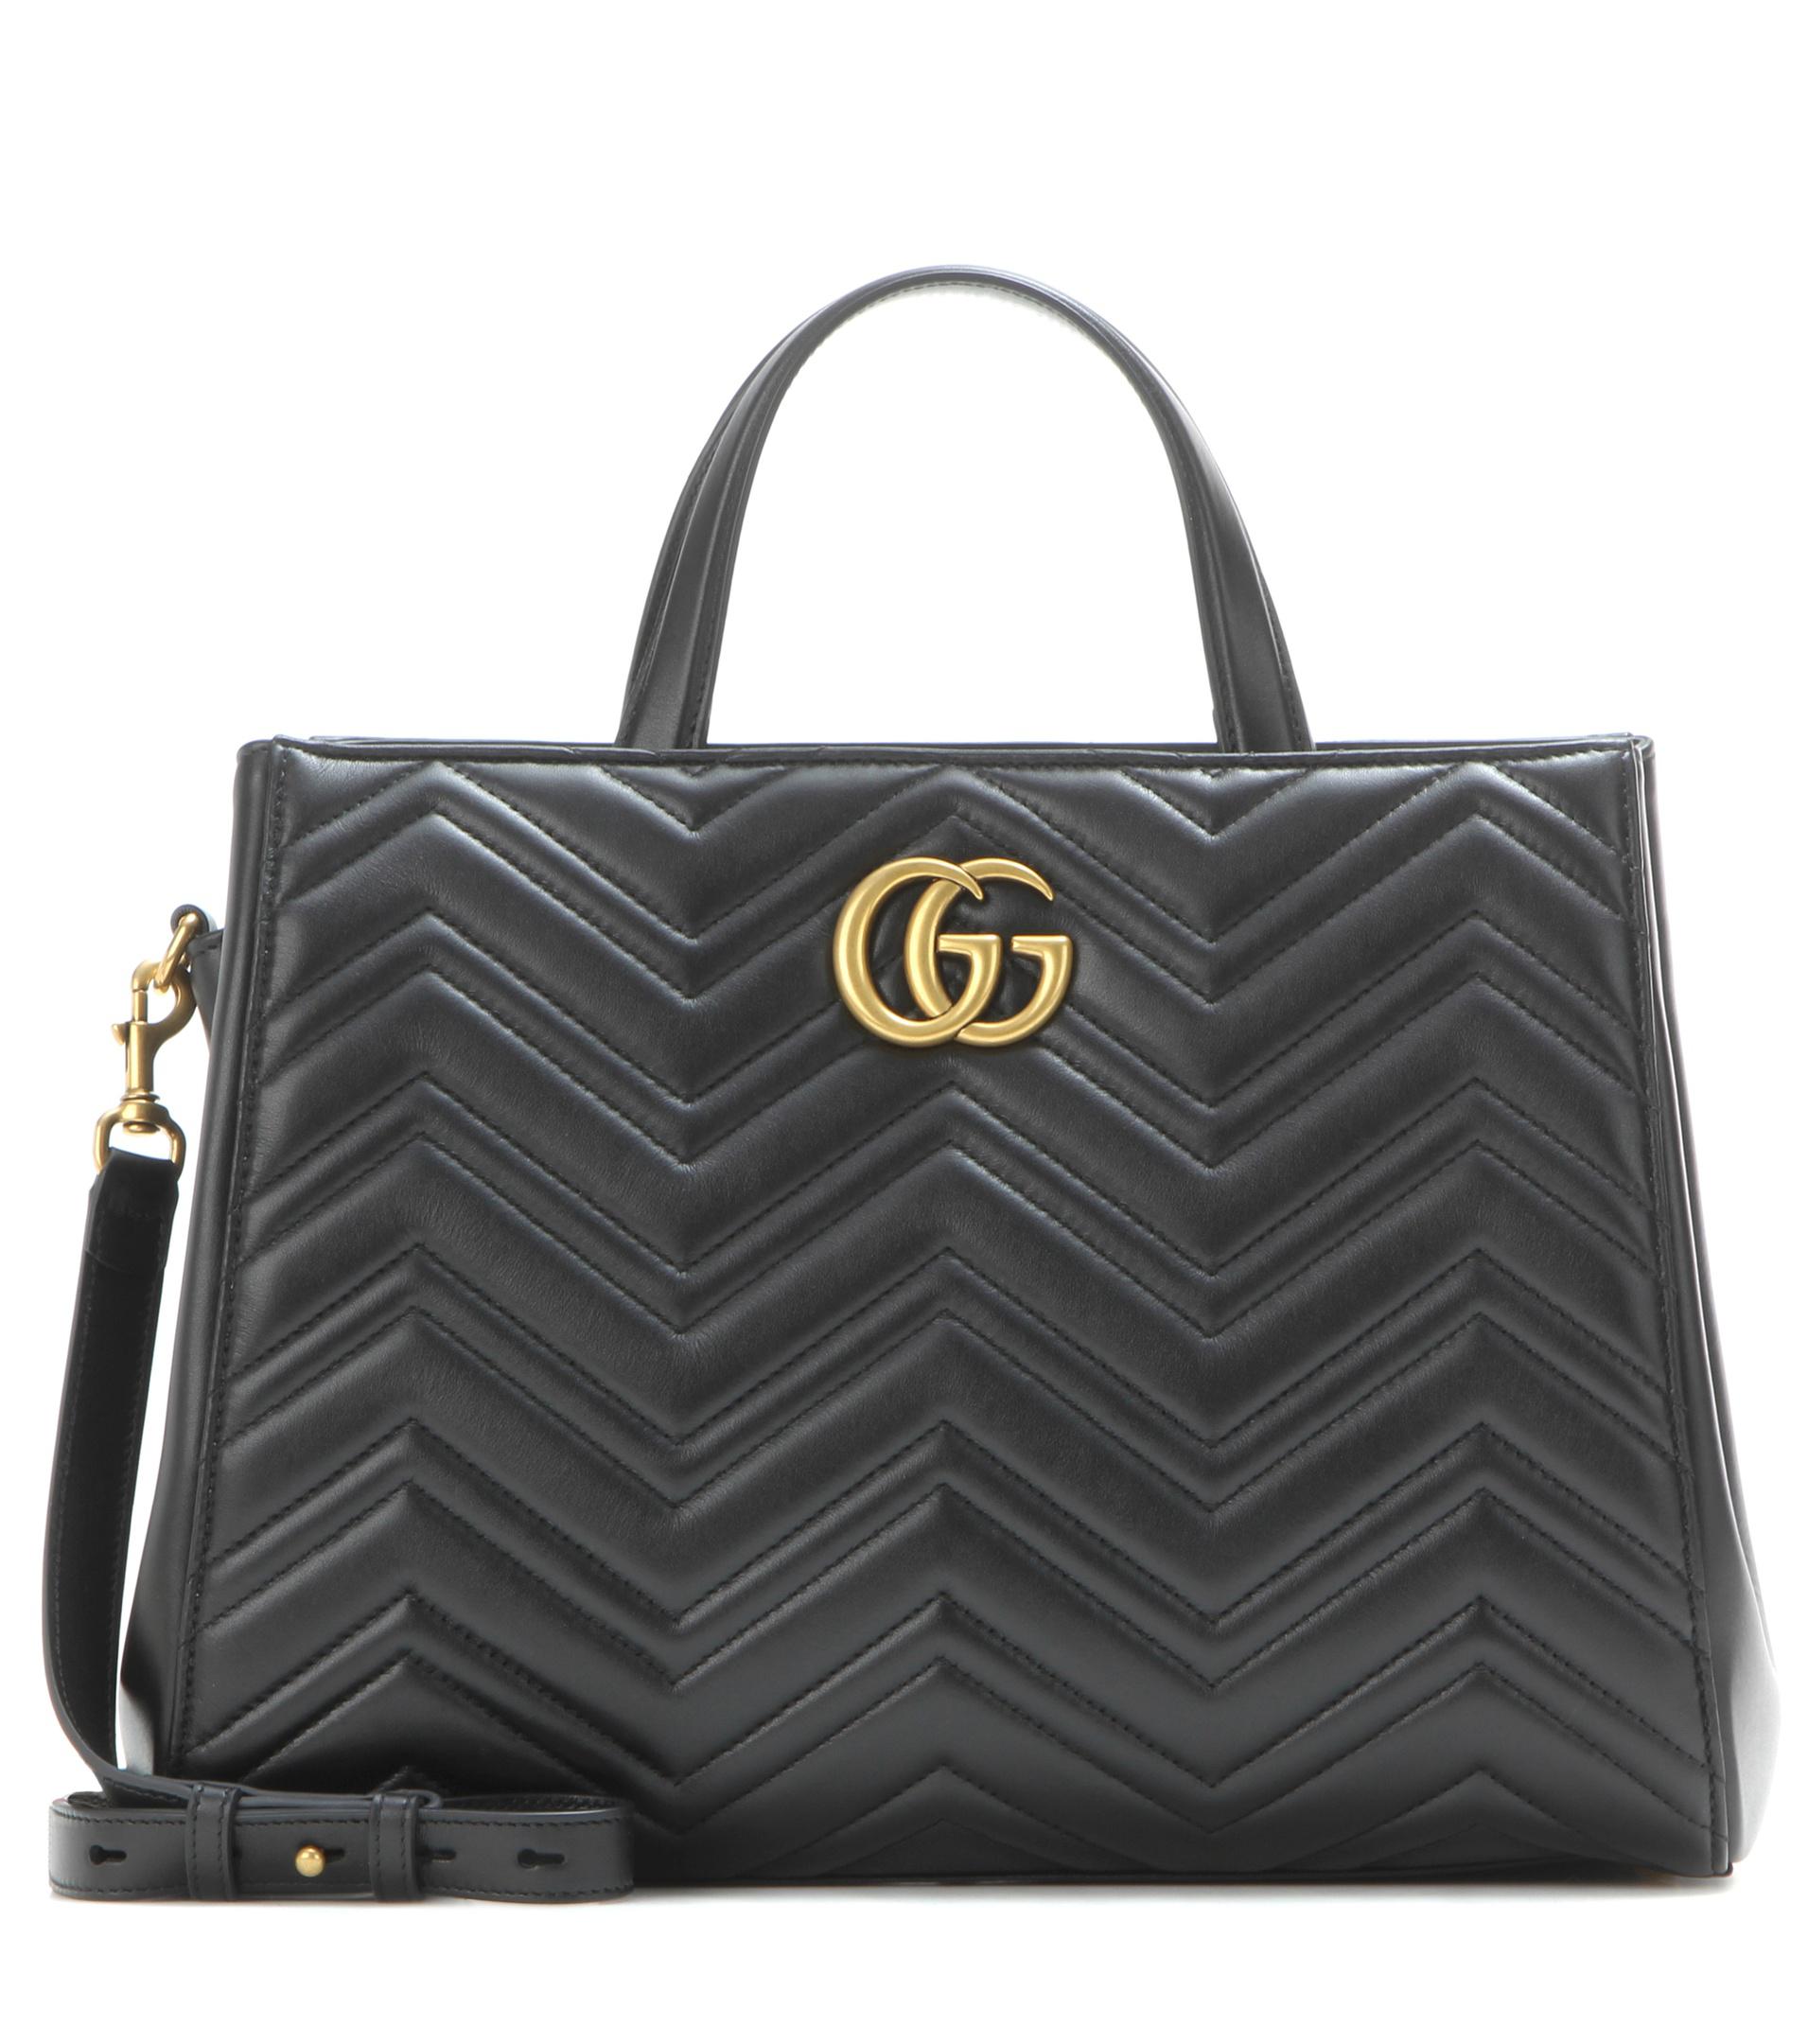 Gucci Gg Marmont Matelassé Leather Tote in Black